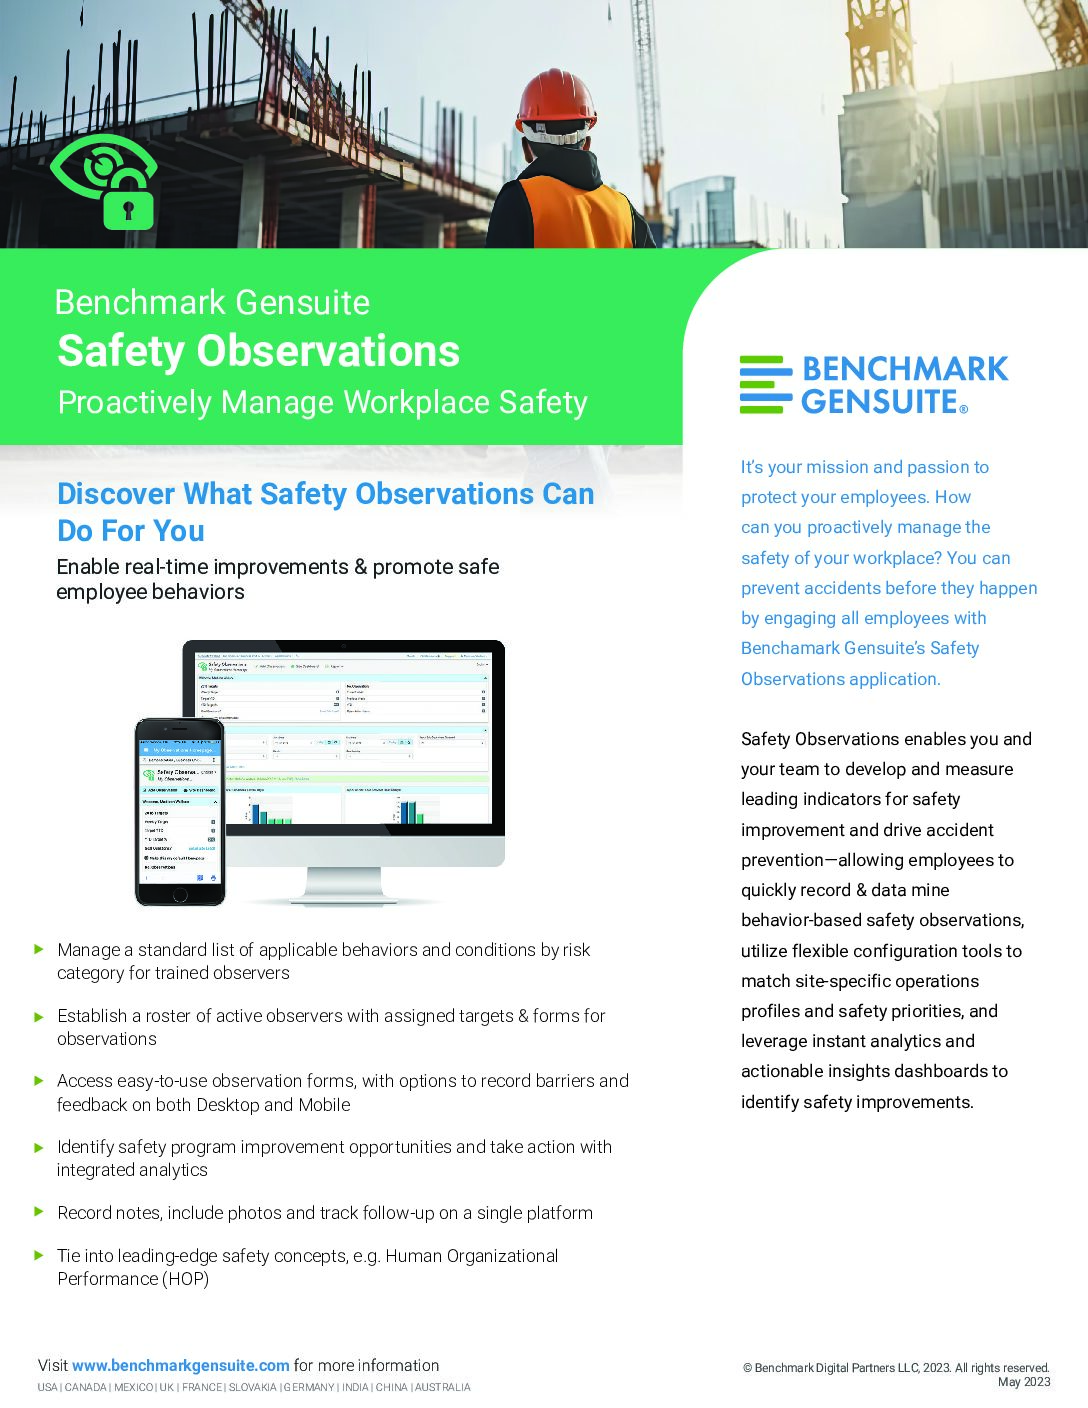 Safety Observations